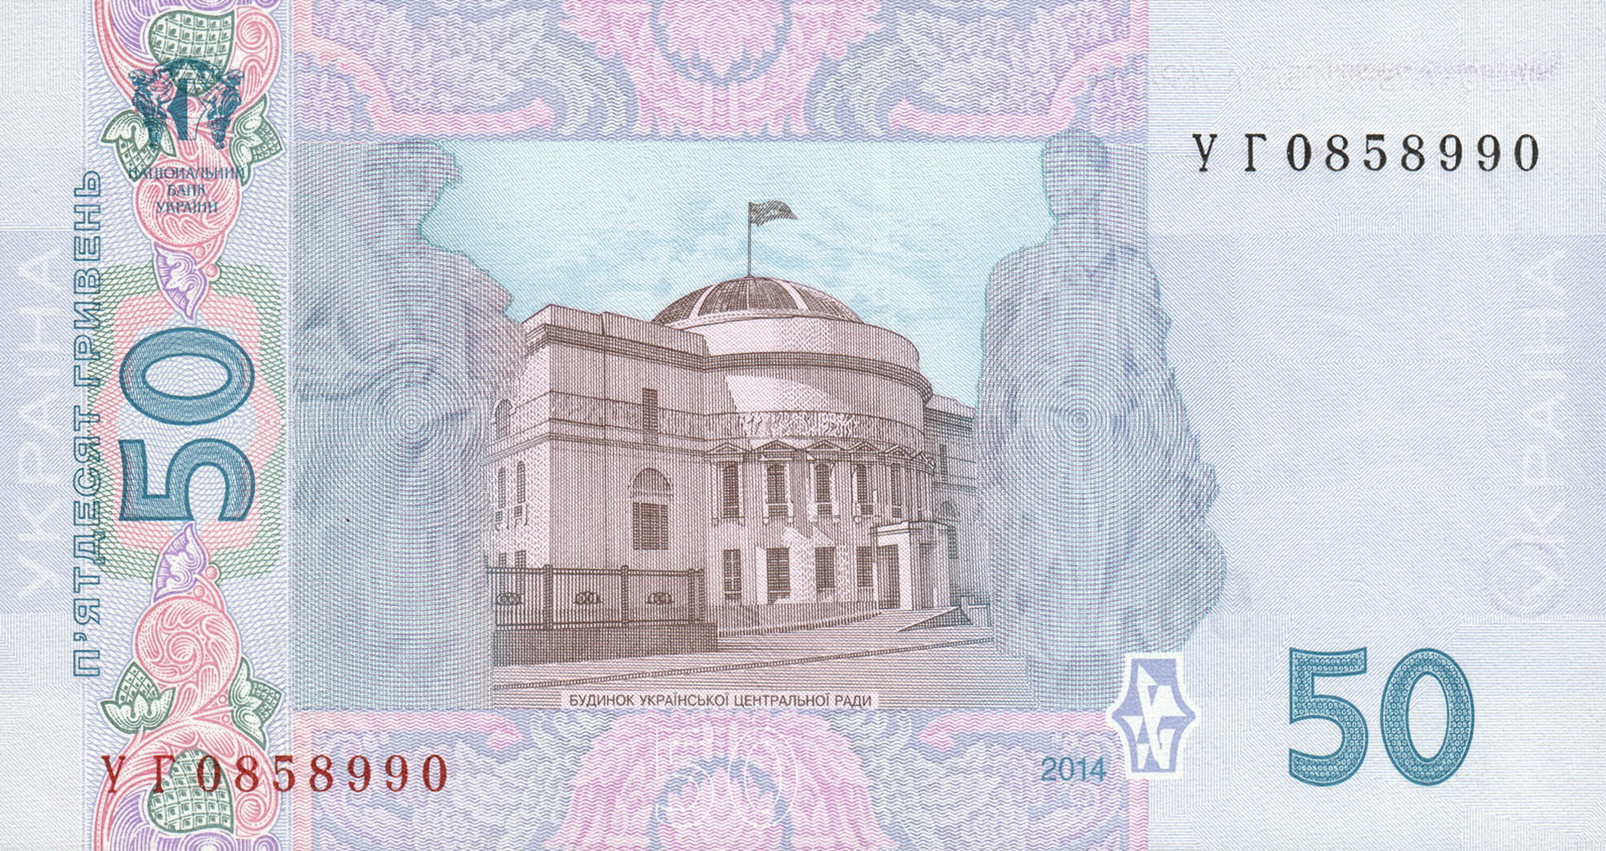 Ukraine new signature 50-hryvnia note (B850f) confirmed – BanknoteNews